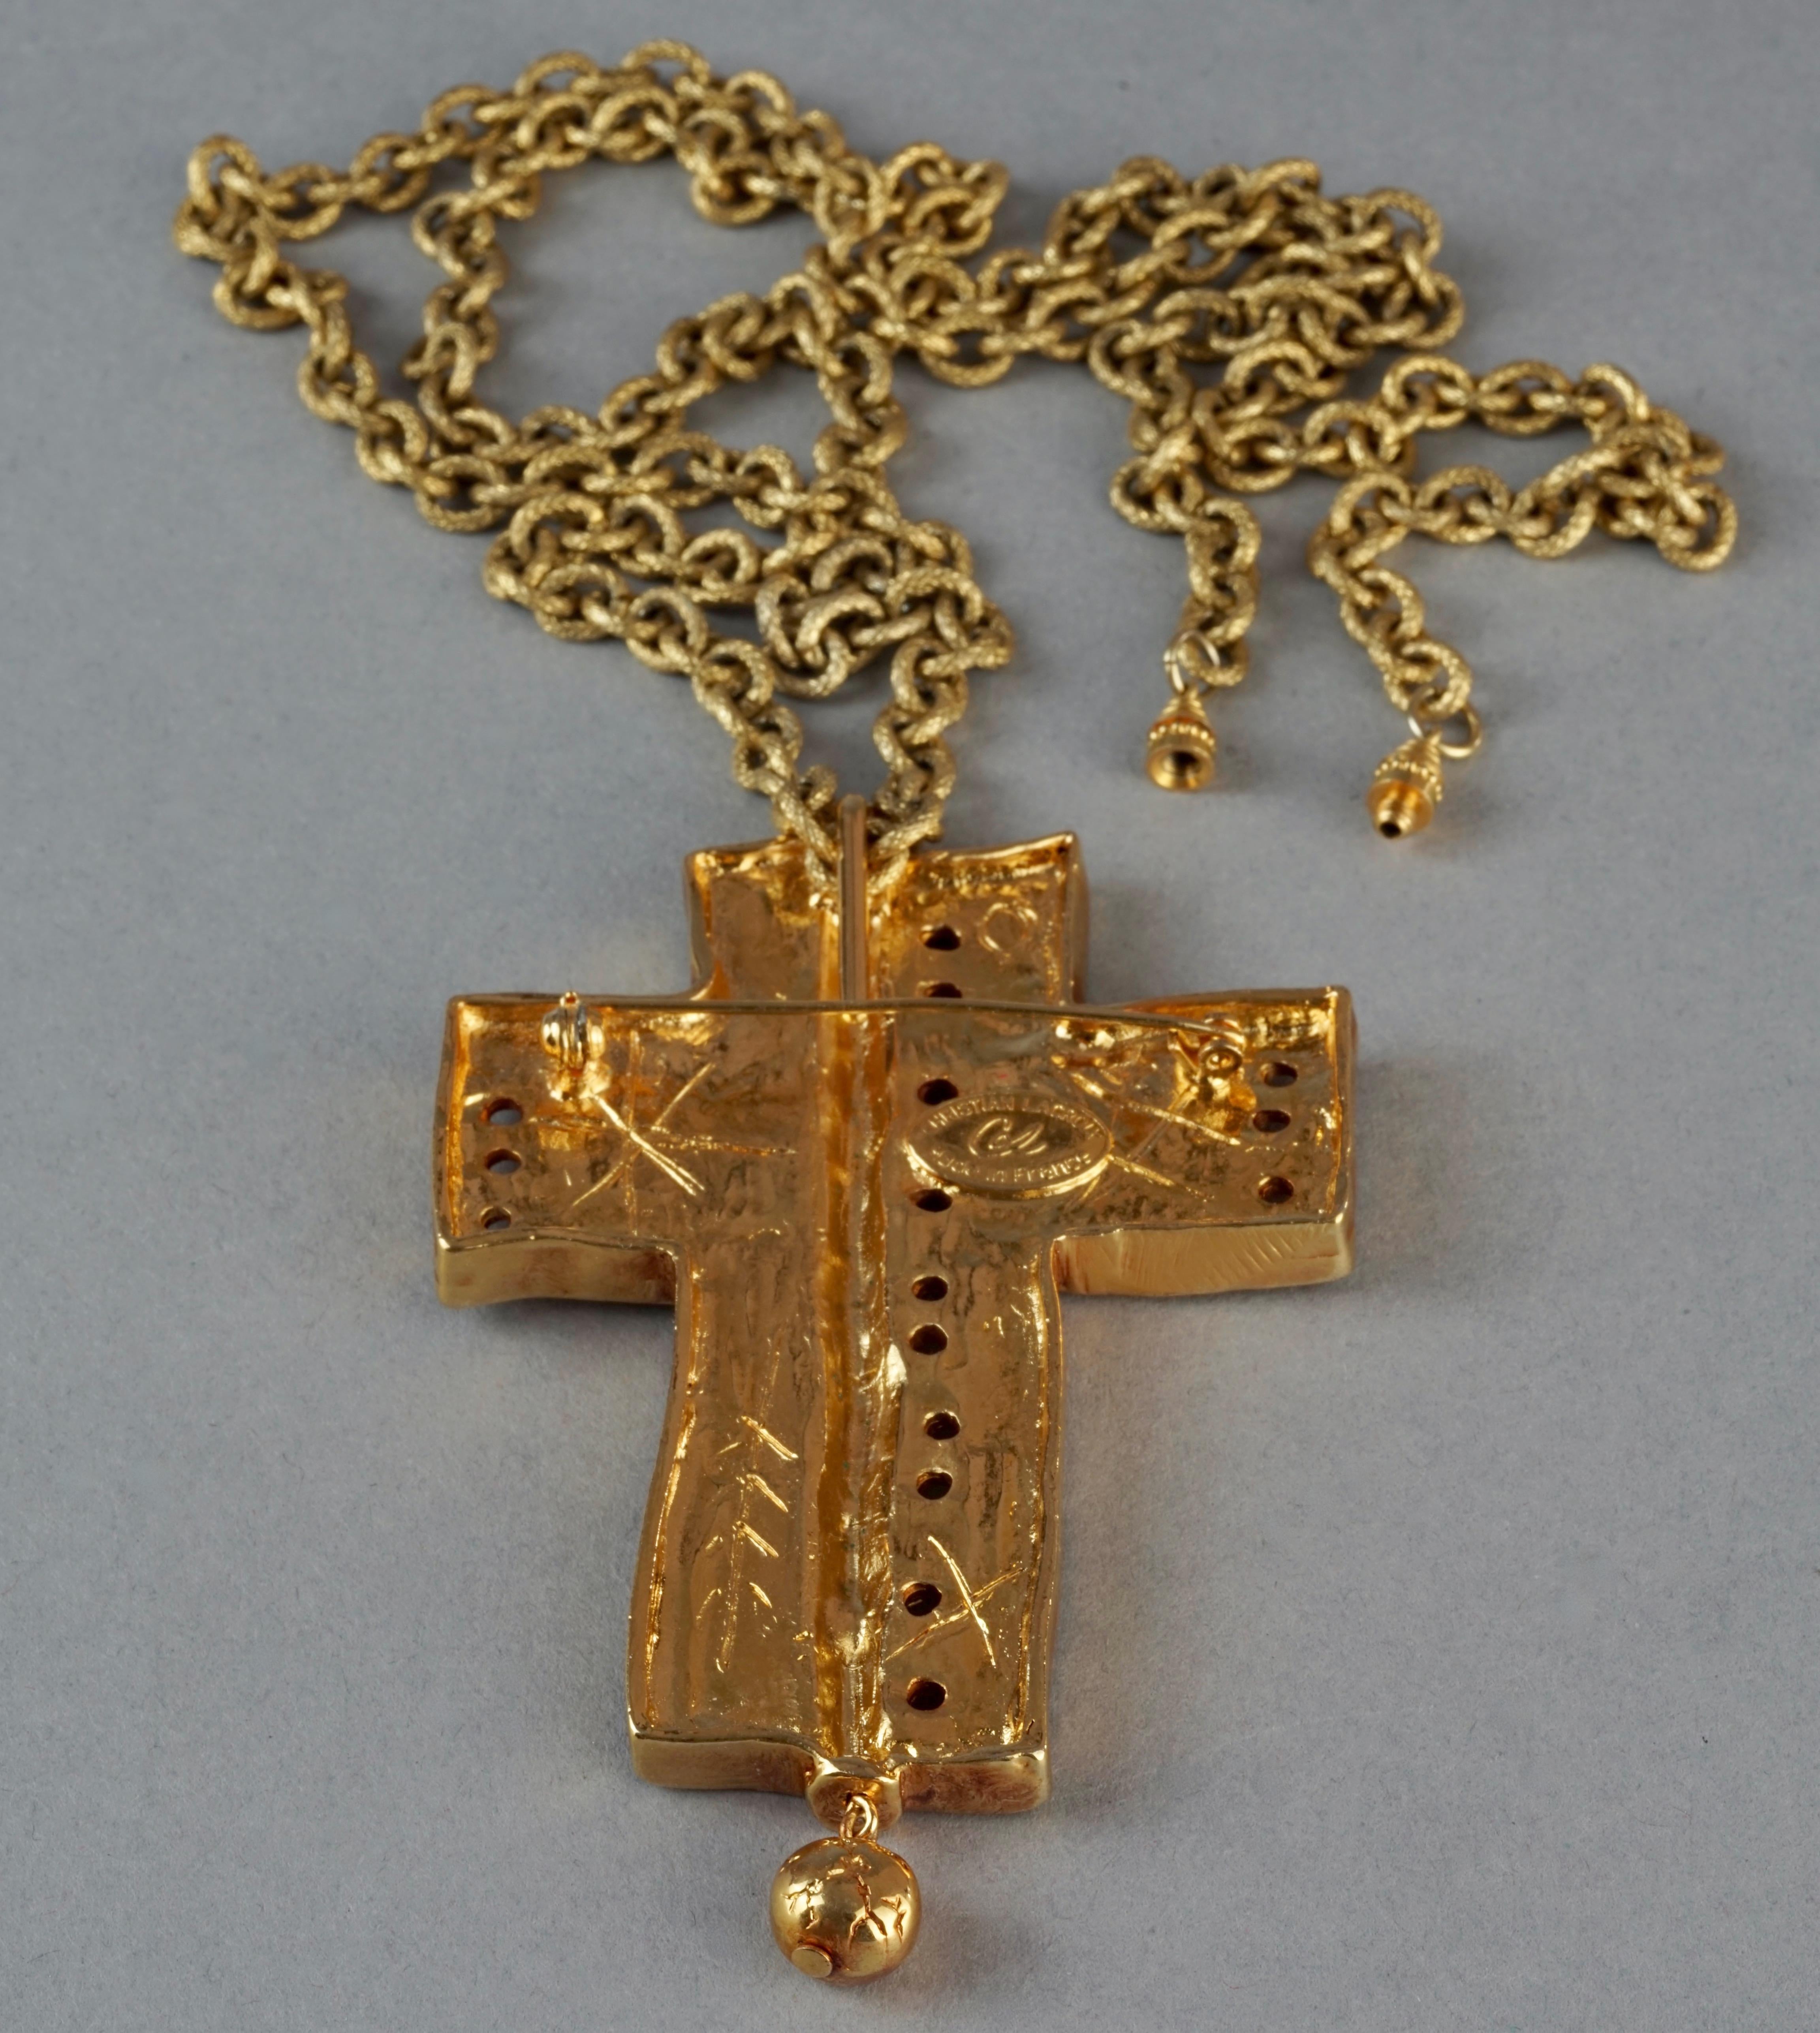 Vintage CHRISTIAN LACROIX Graffiti Cross Brooch Pendant Necklace 8